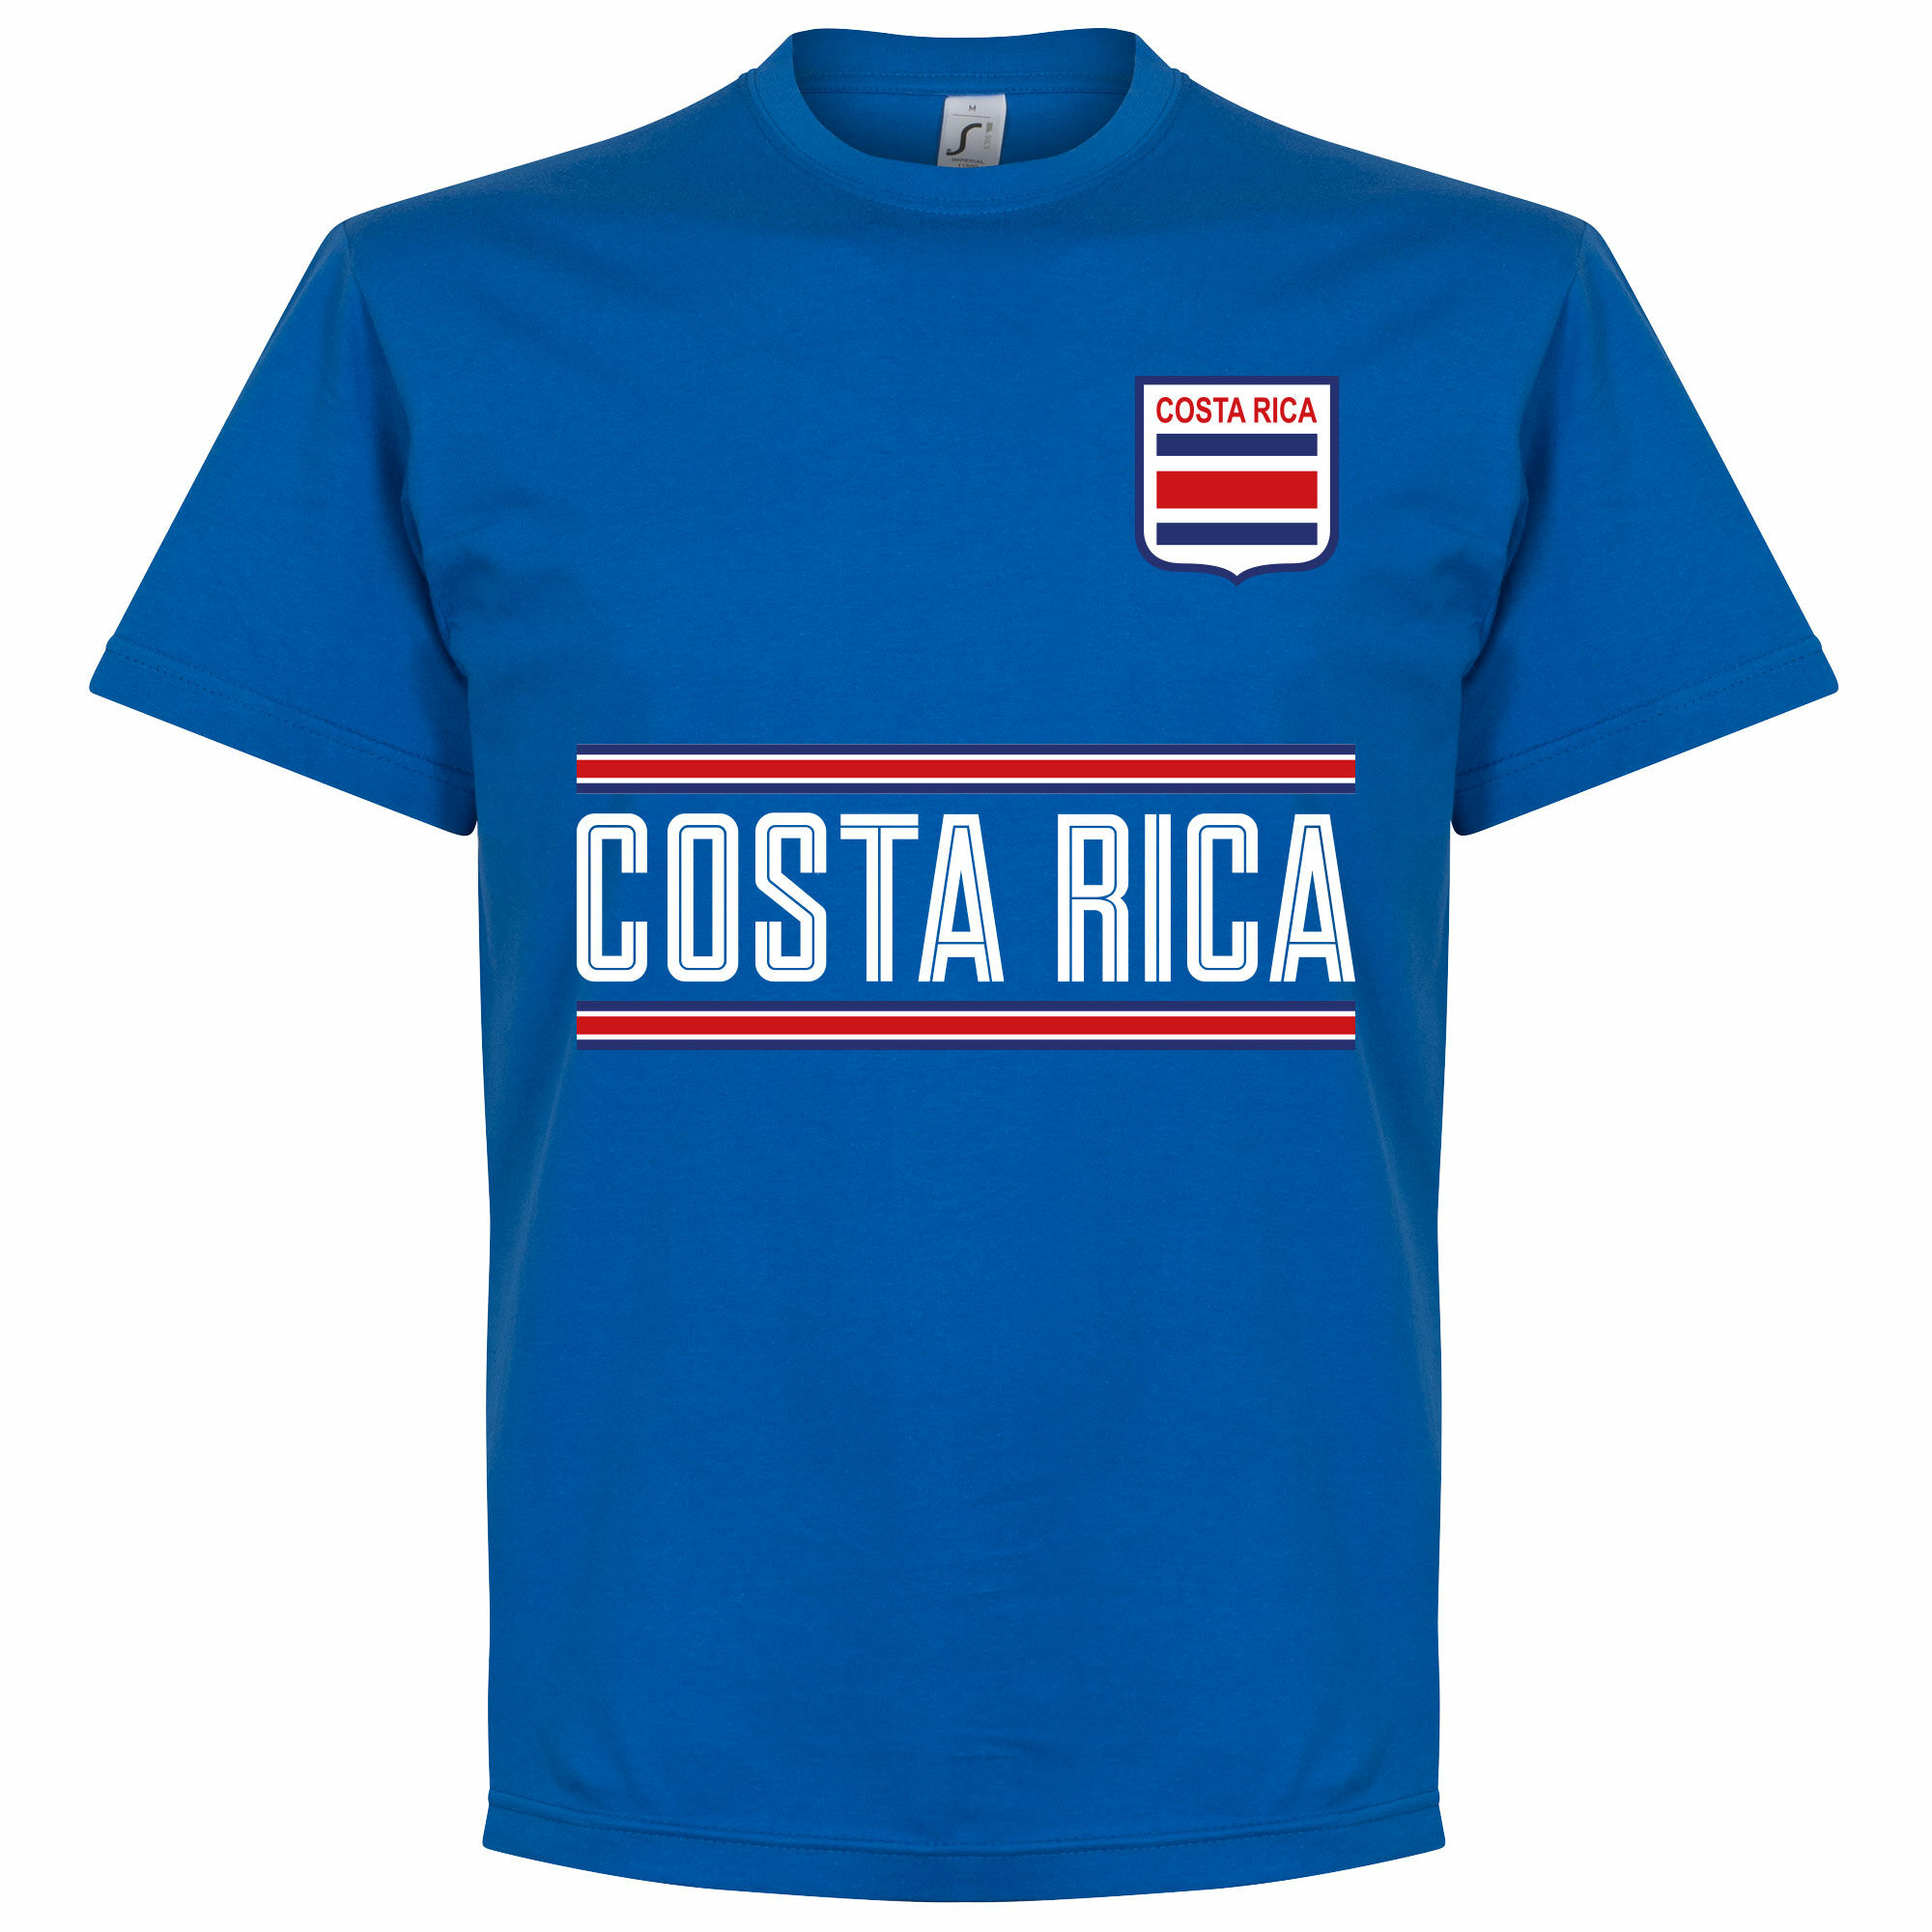 Kostarika - Tričko - modré